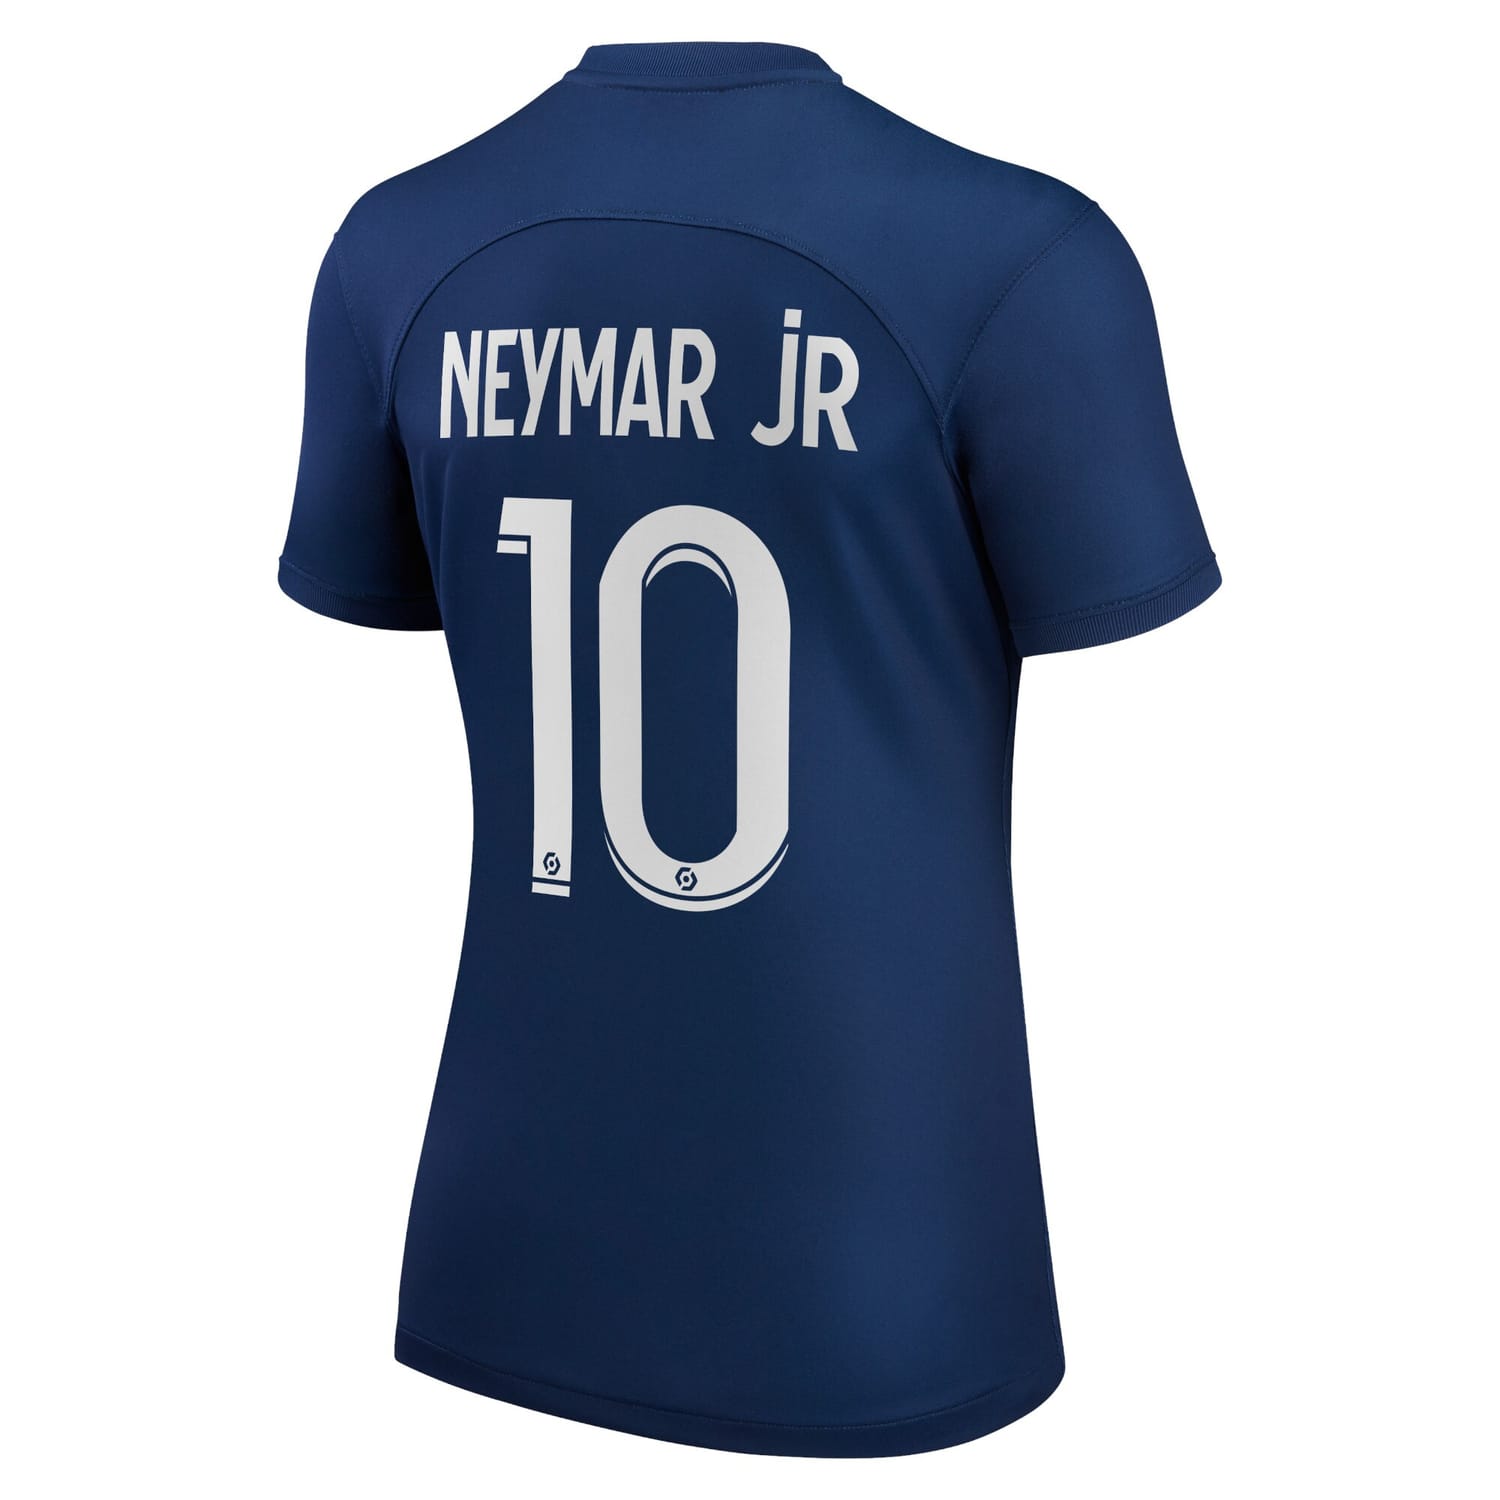 Ligue 1 Paris Saint-Germain Home Jersey Shirt Blue 2022-23 player Neymar Jr. printing for Women